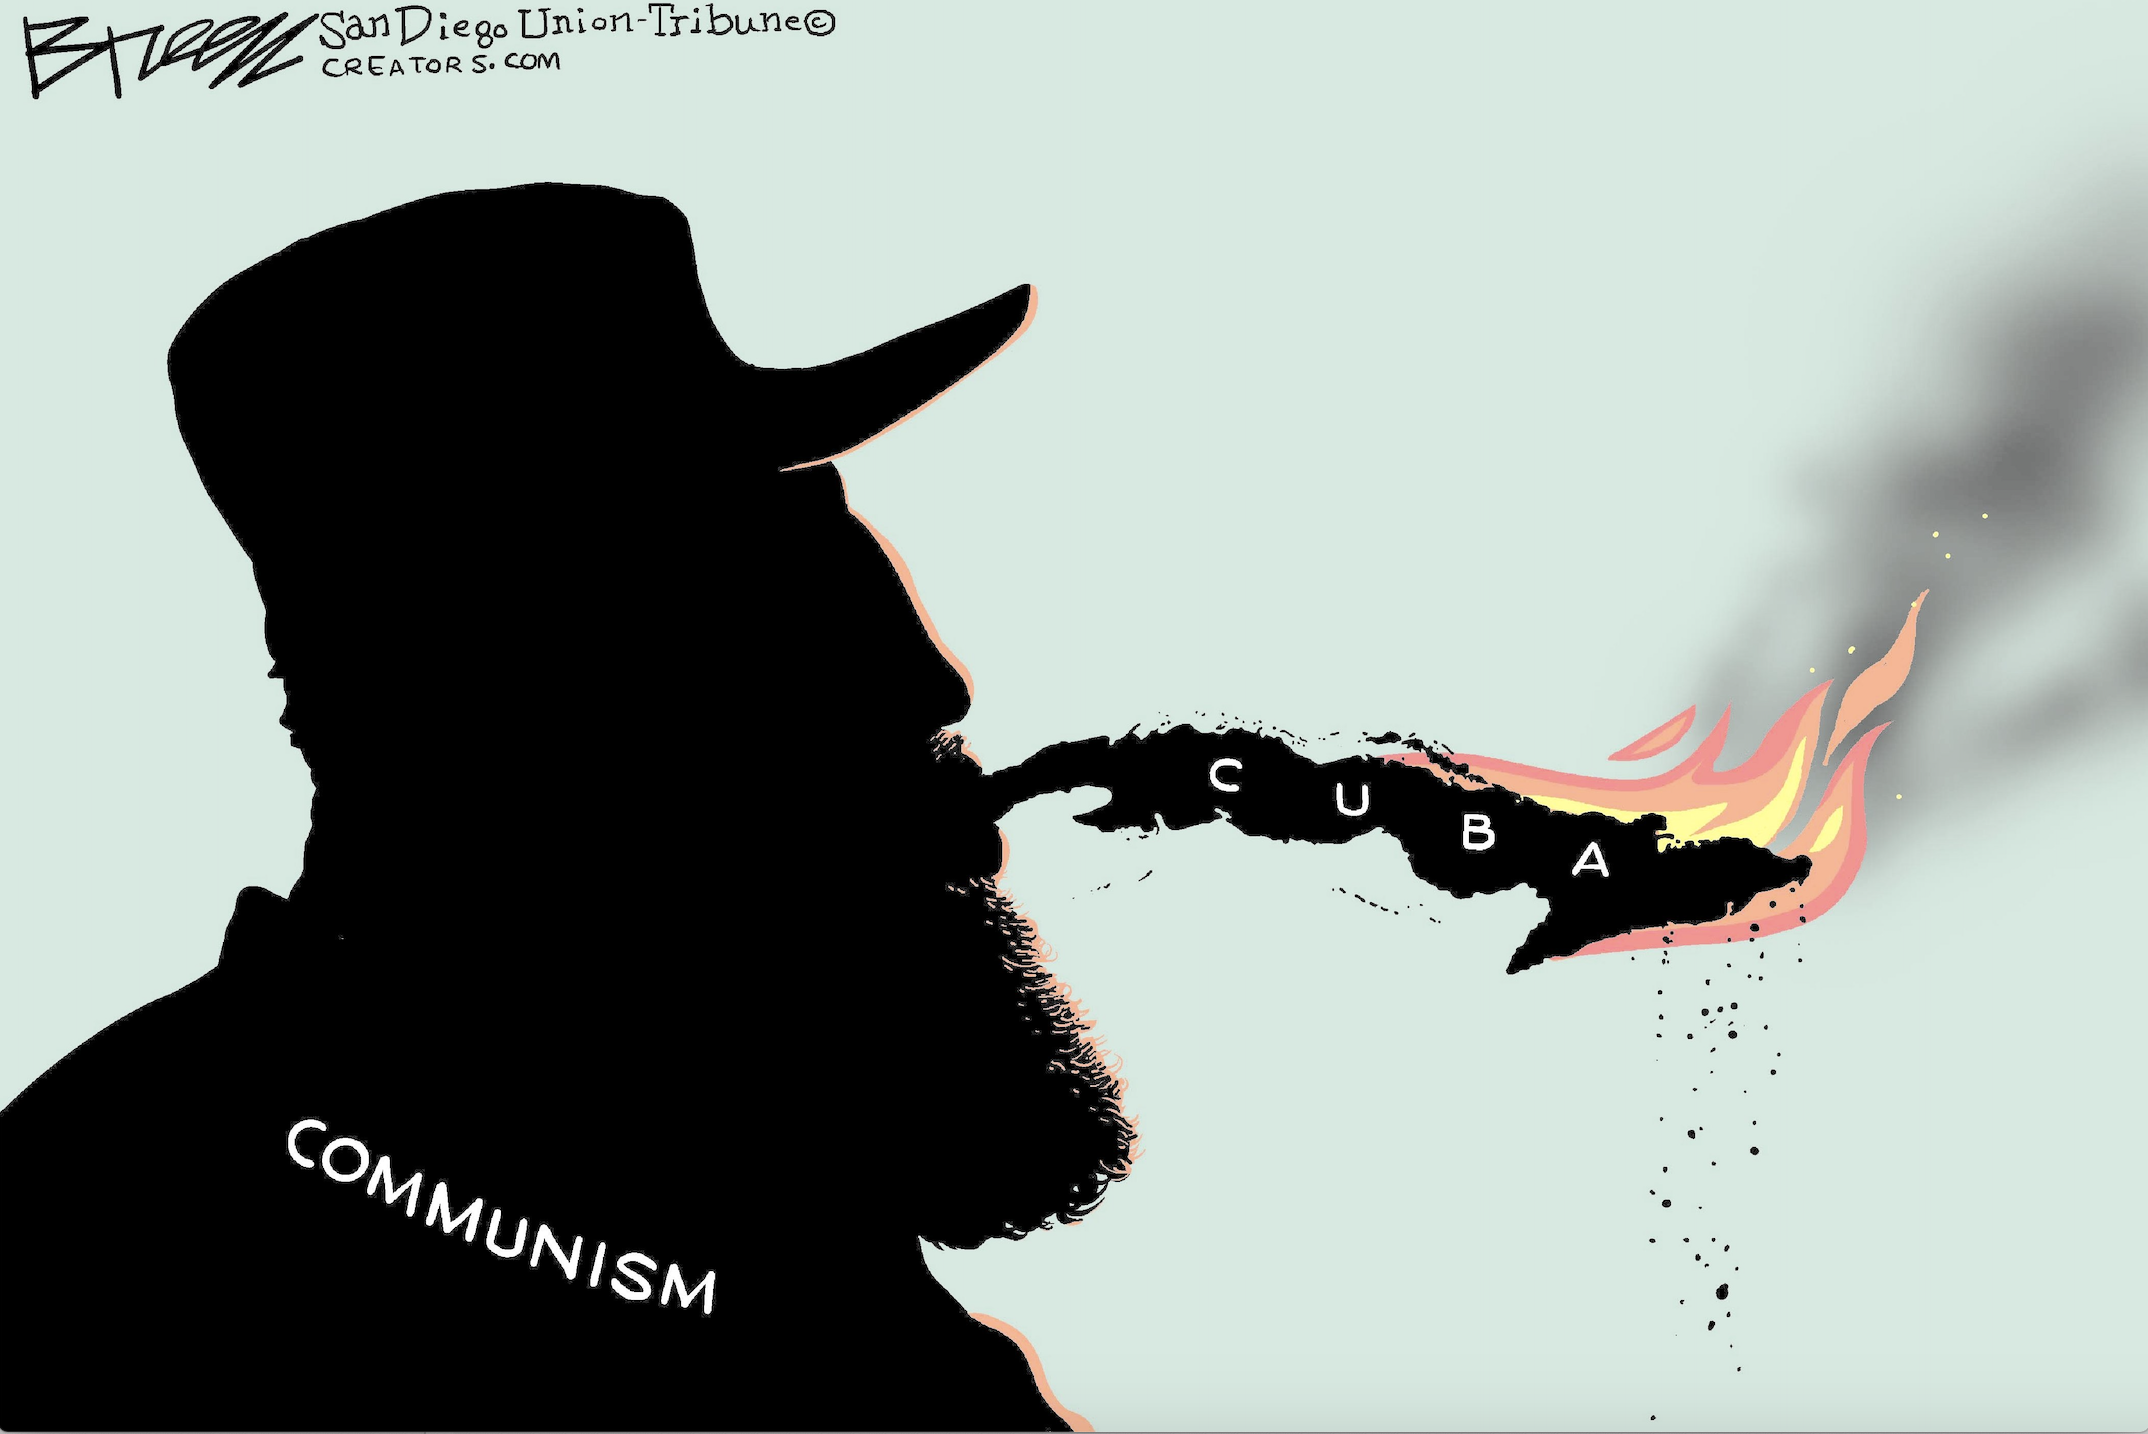 communism burning cuba